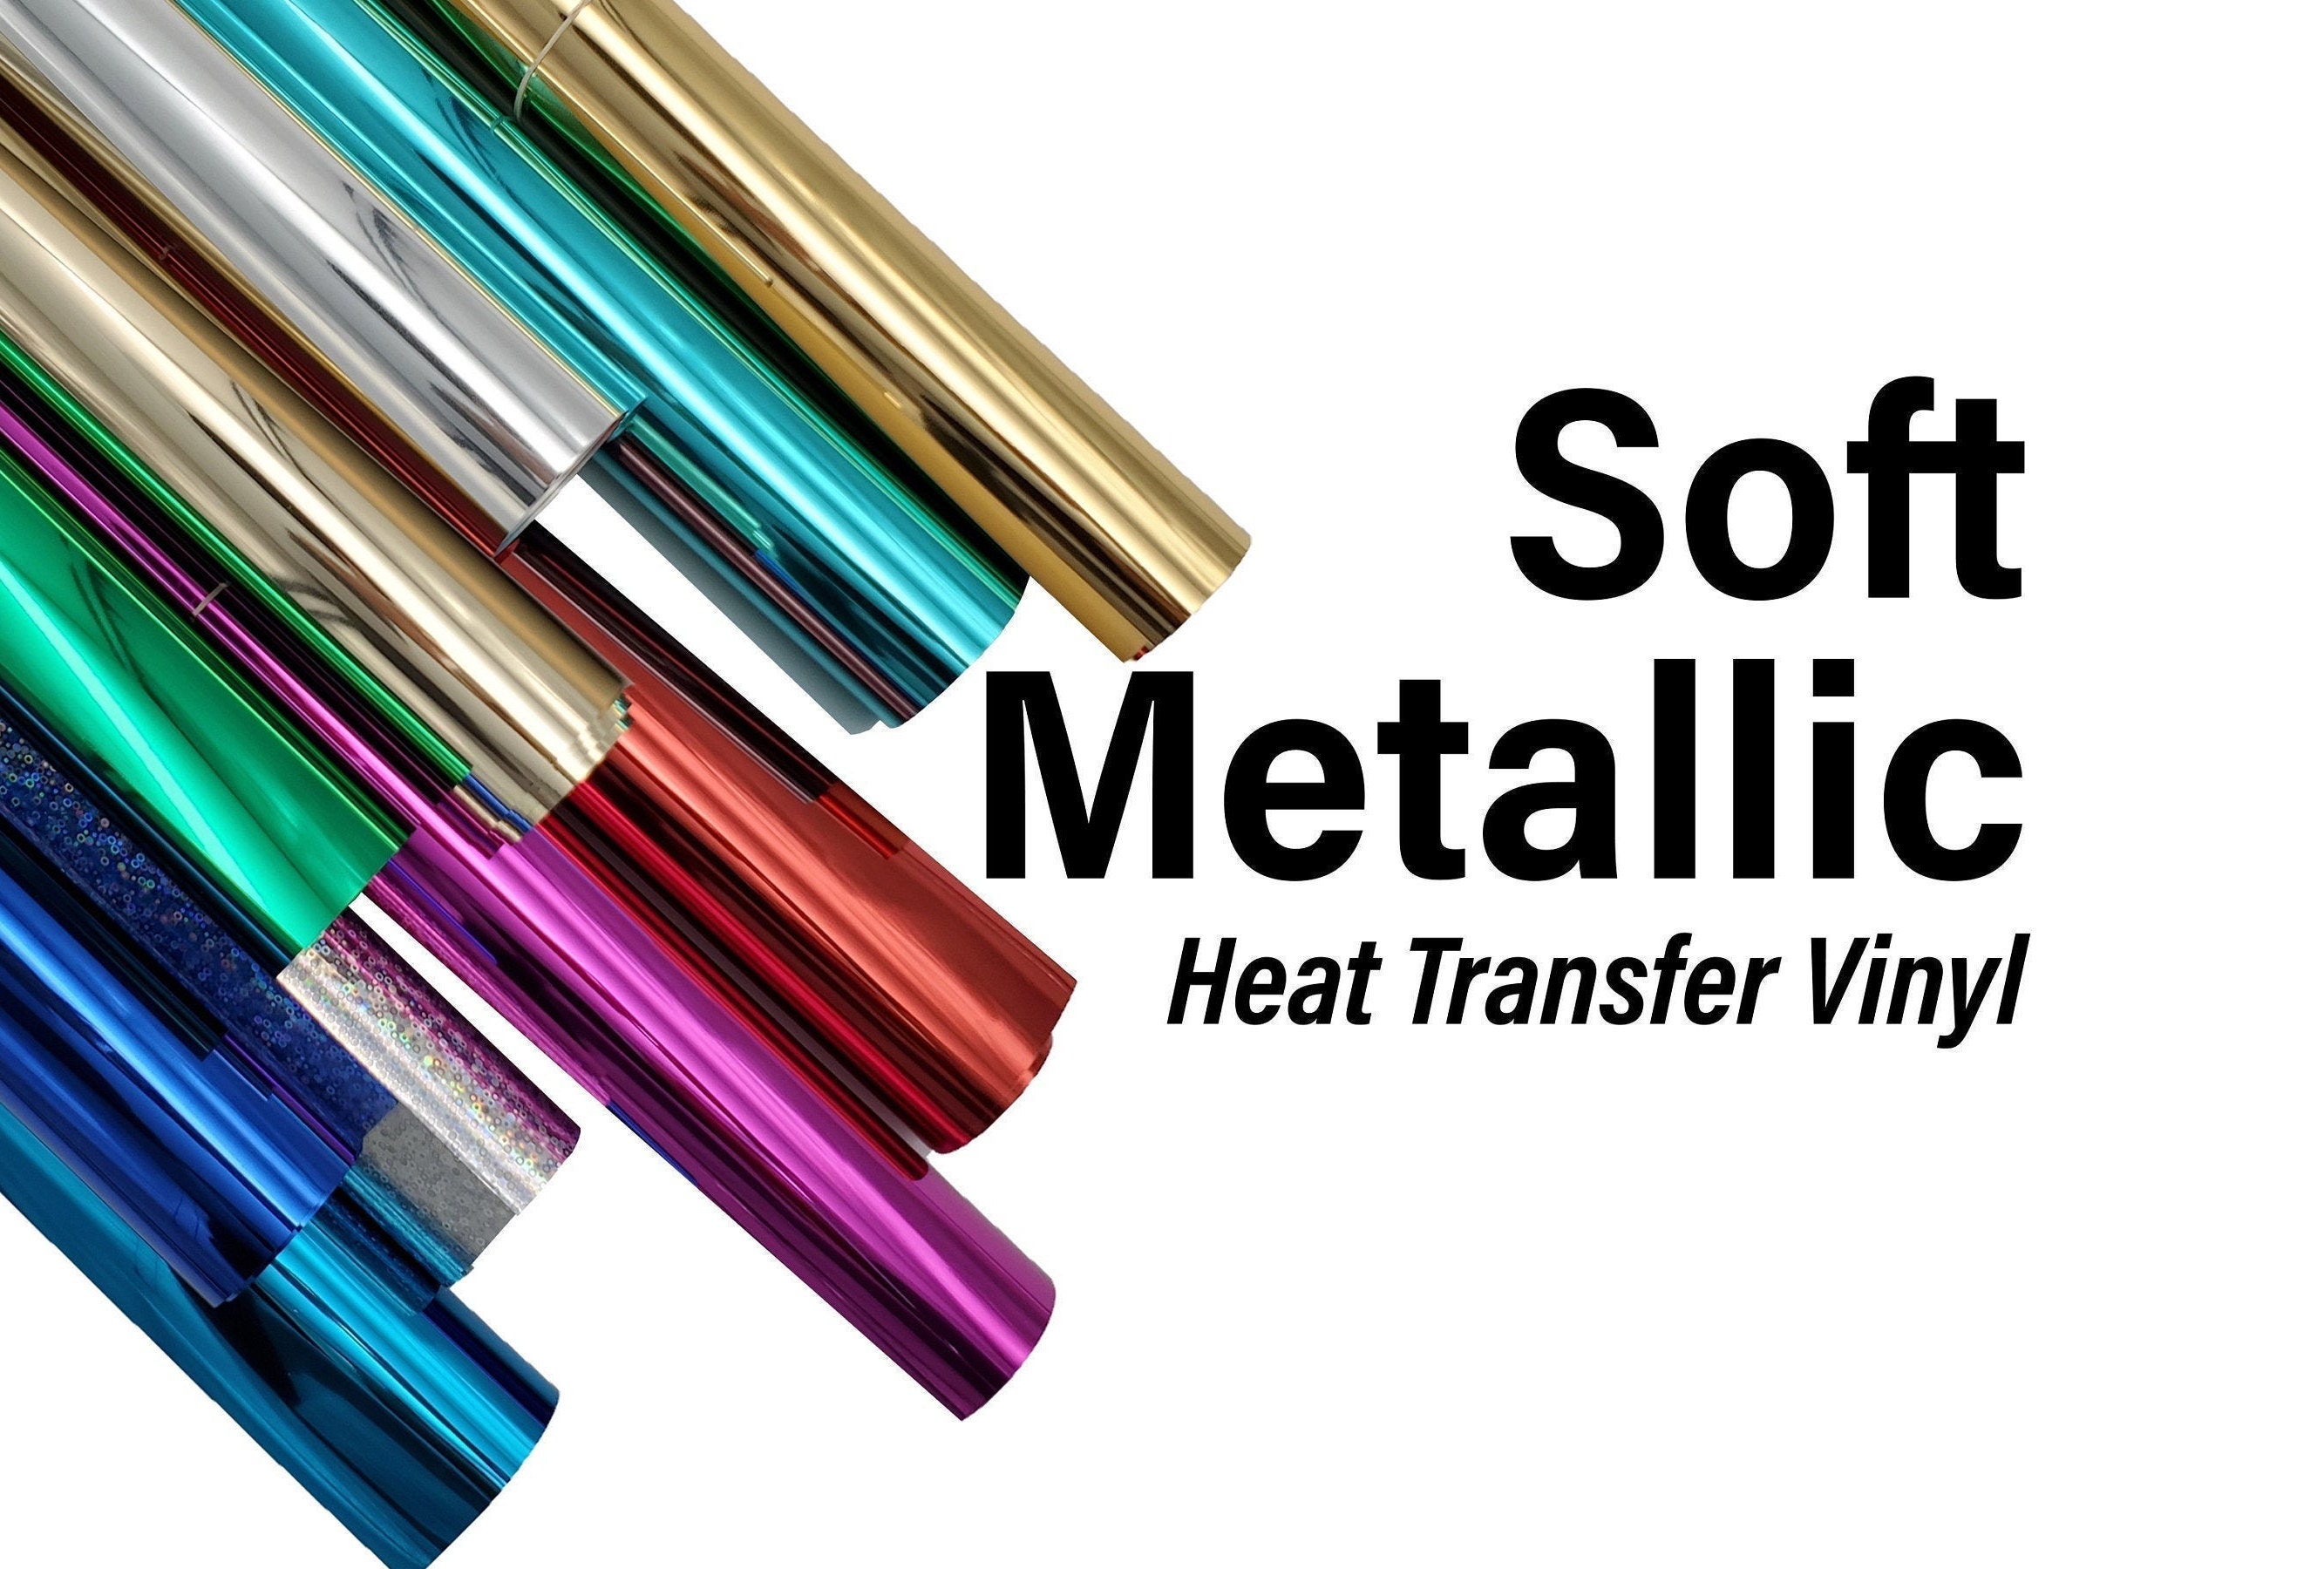 Soft Metallic Heat Transfer Vinyl